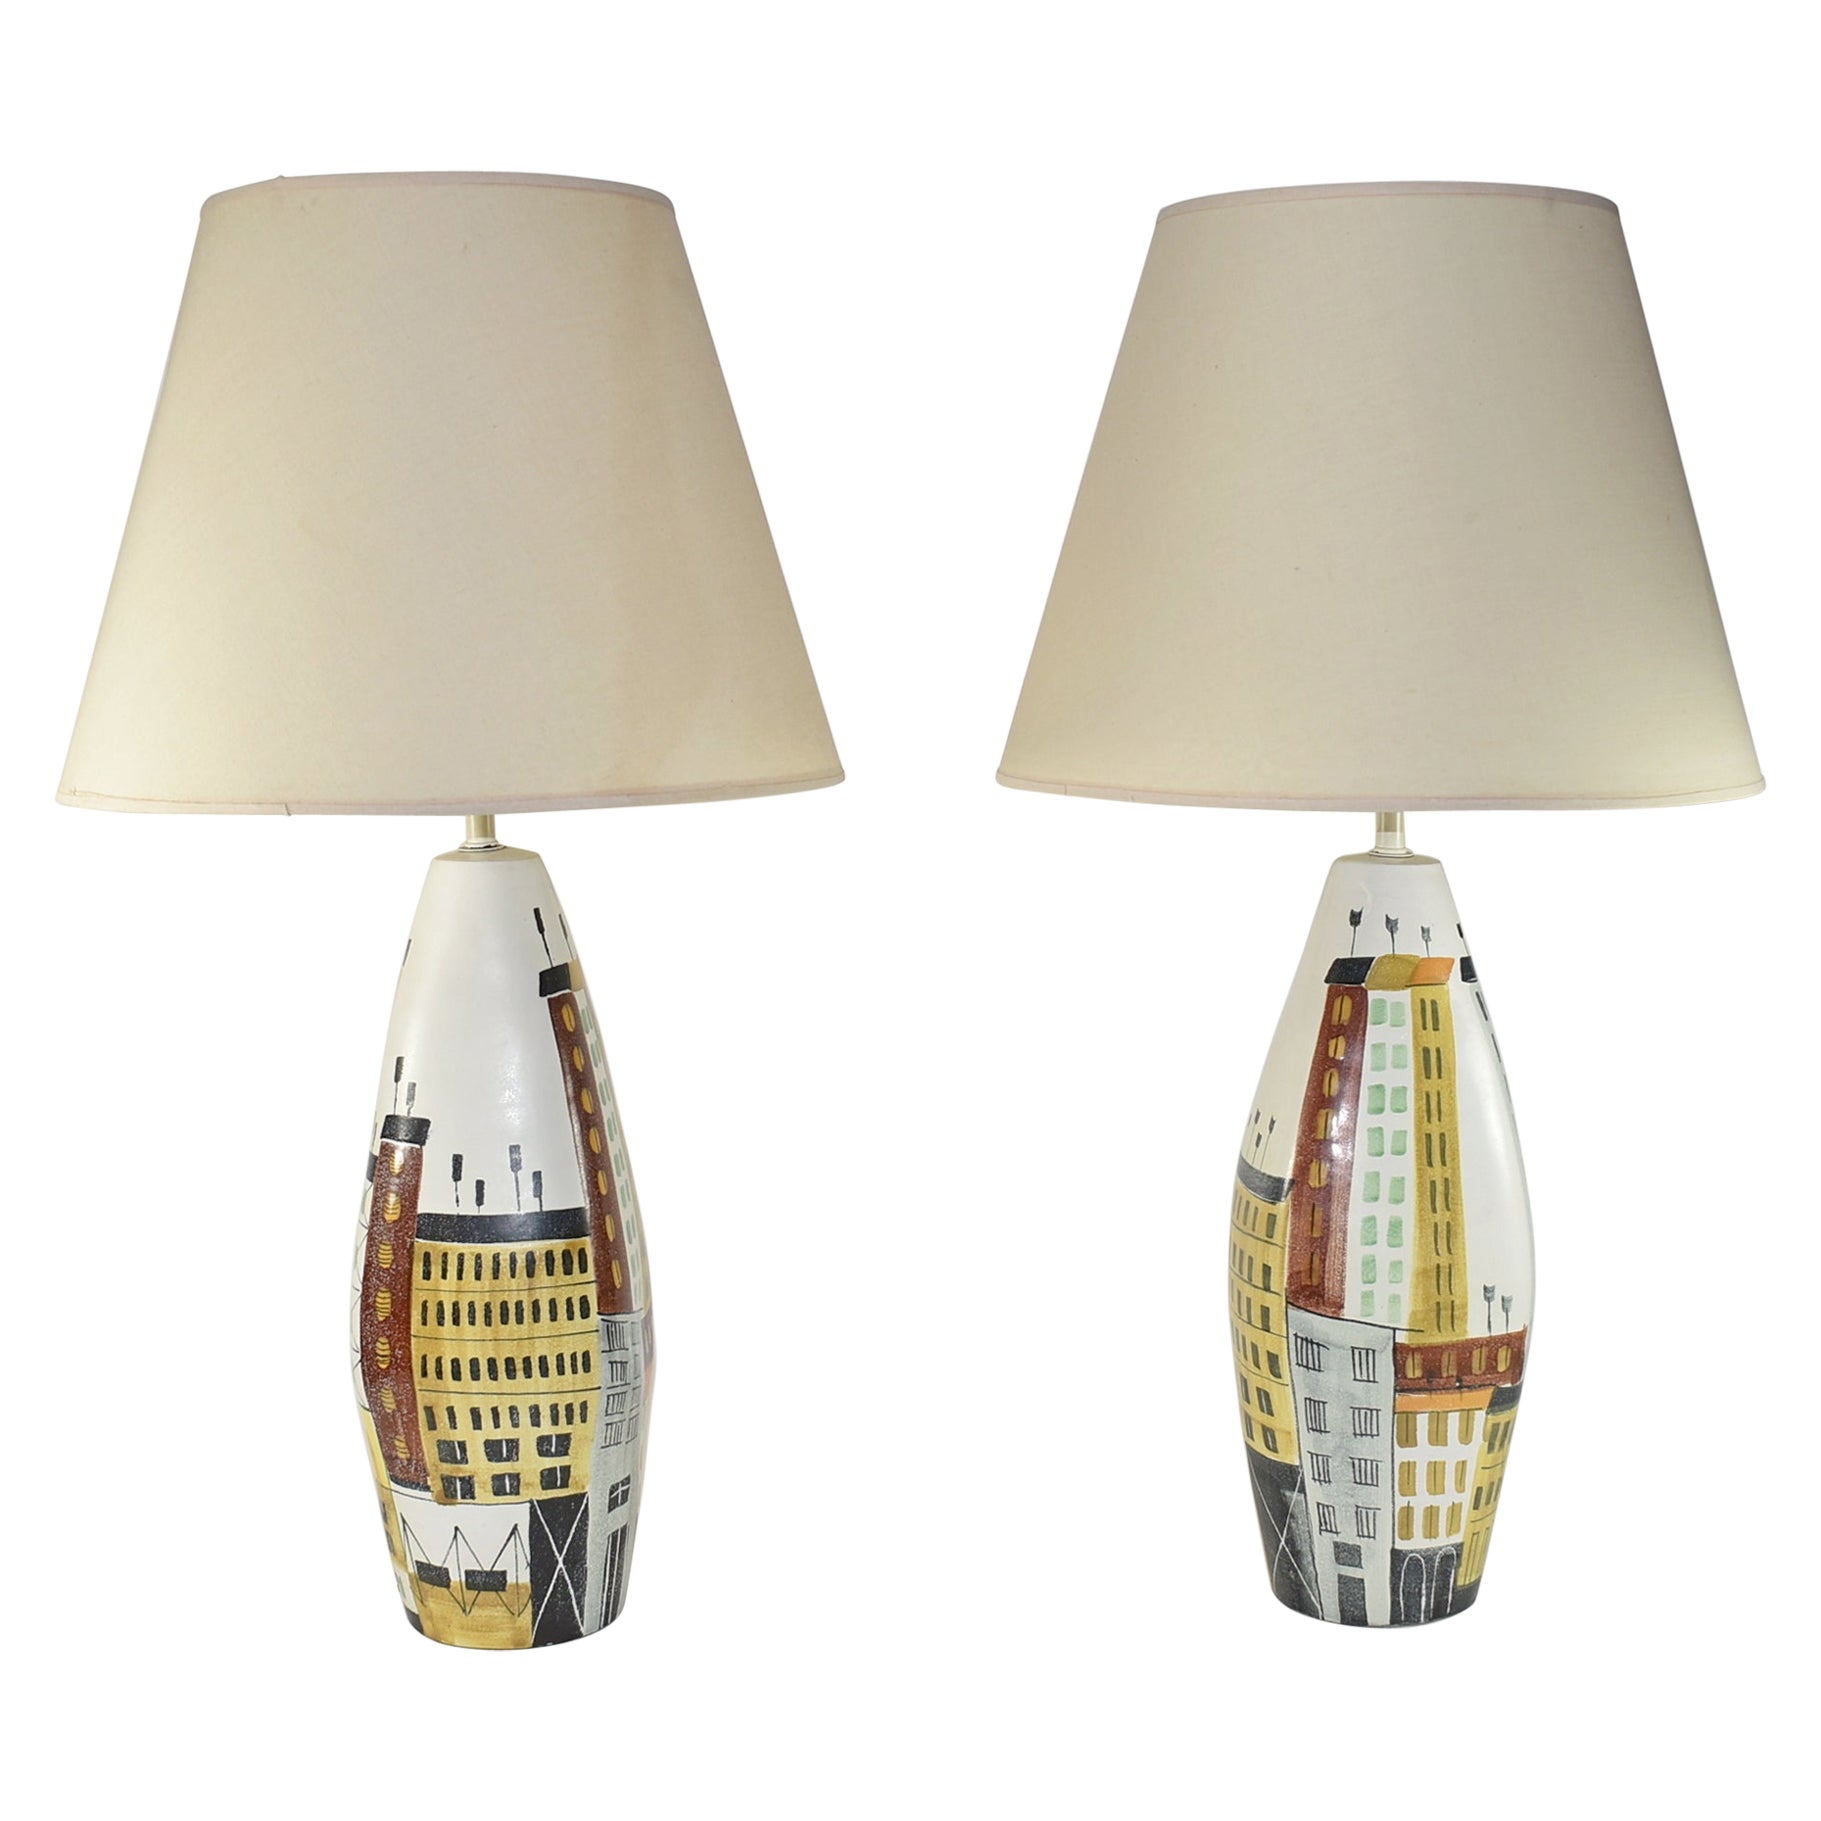 Pair of Bitossi Raymor Italian Cityscape Ceramic Table Lamps